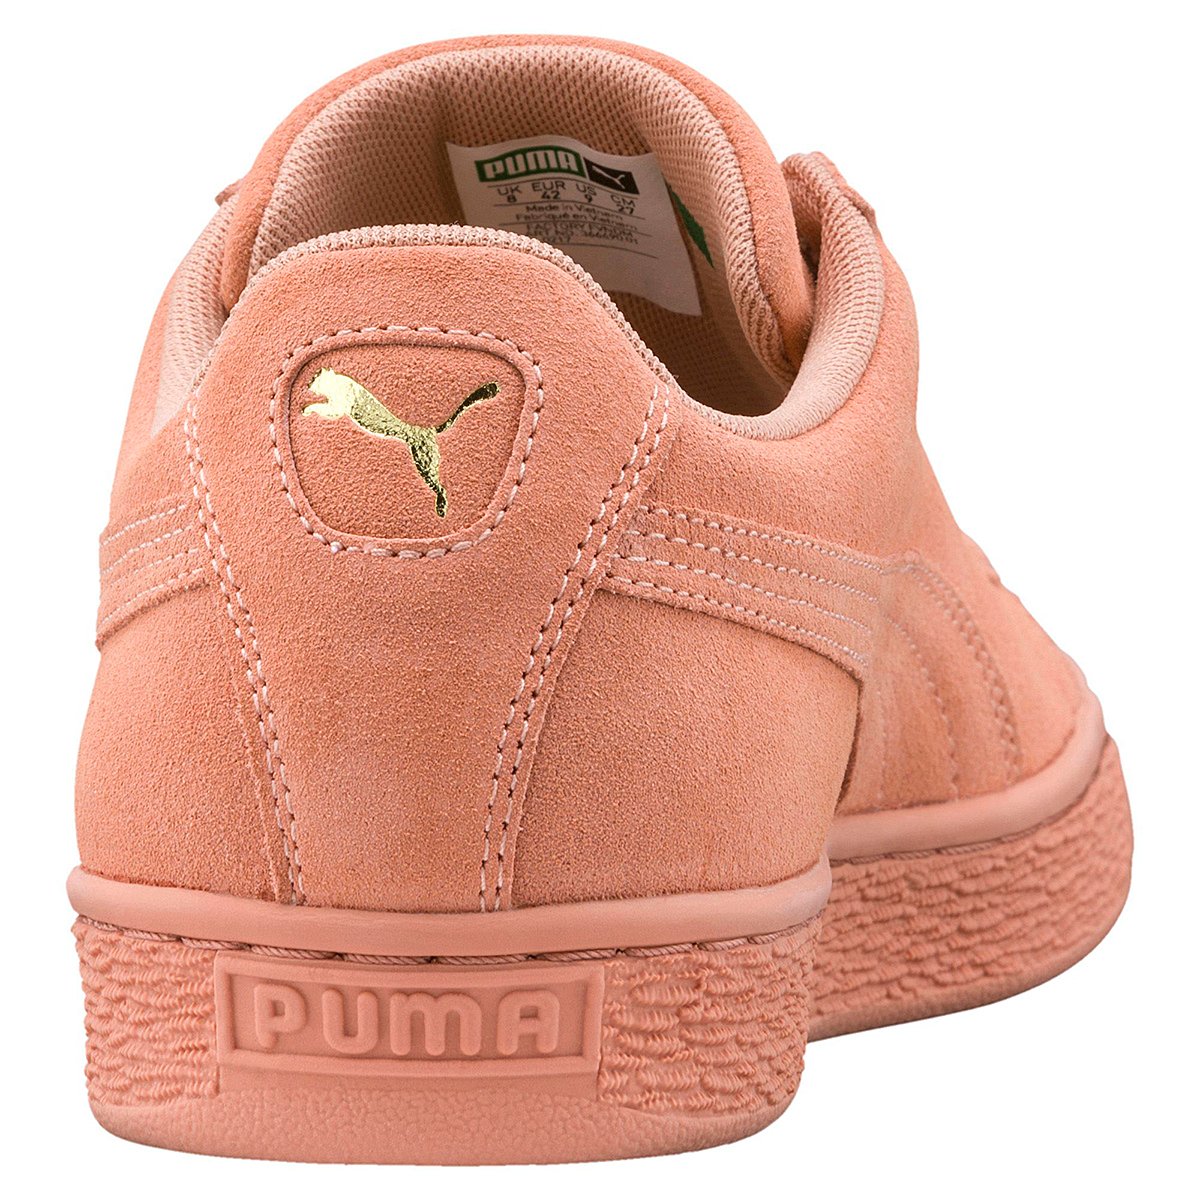 Puma Suede Classic Tonal Unisex Sneaker Low-Top 366490 01